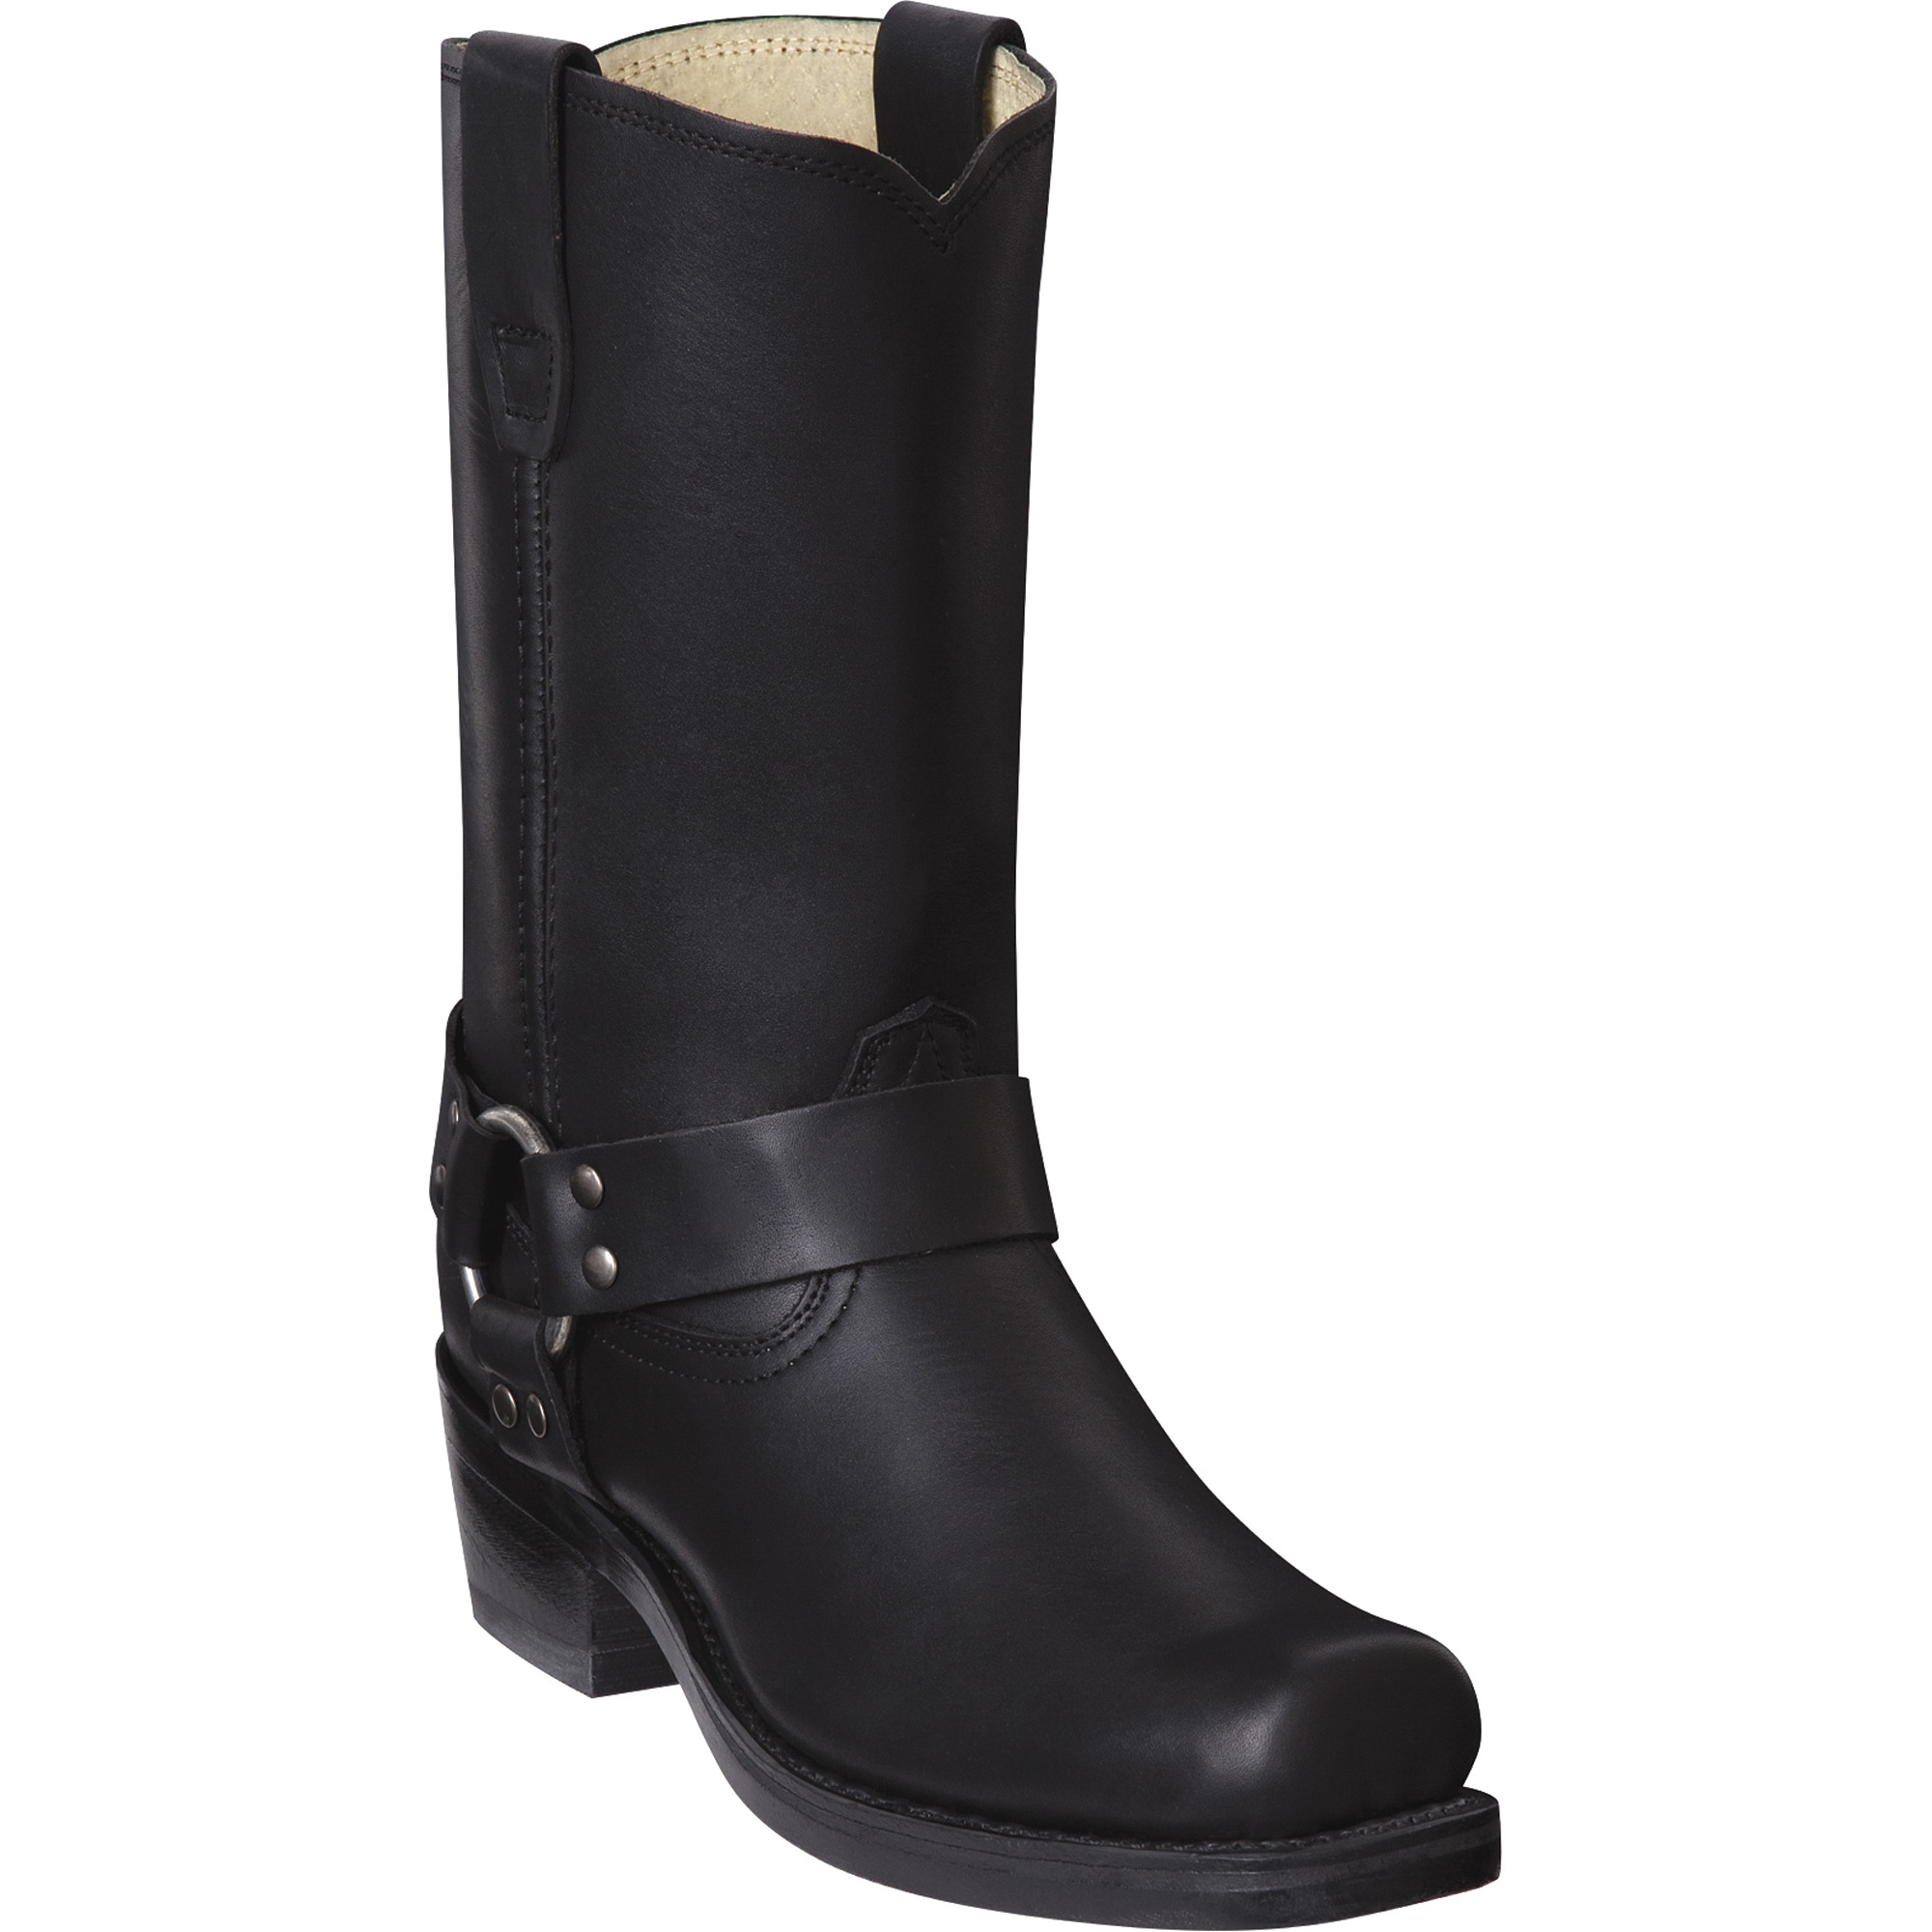 Durango Men's 11Inch Harness Boot - Black, Size 9 Wide, Model DB 510